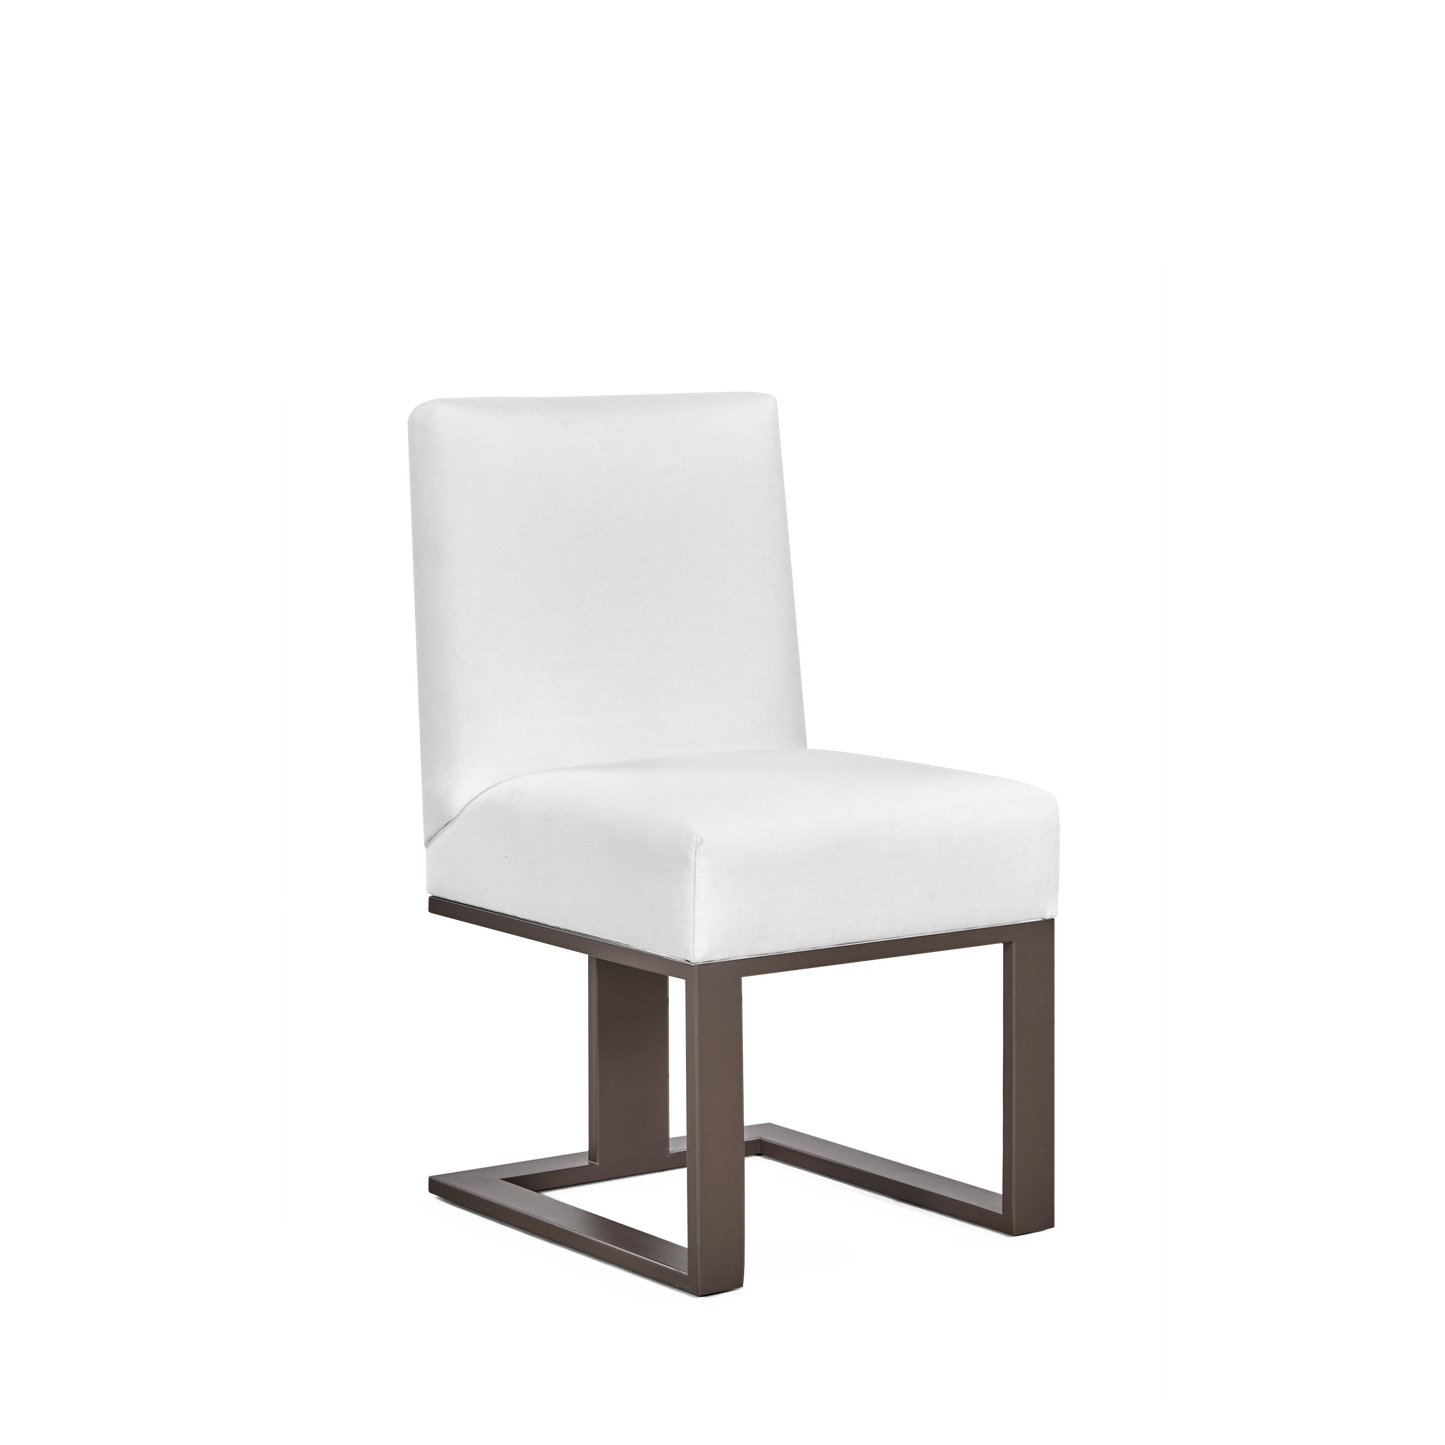 Len chair with linara white textile and moka wood legs 